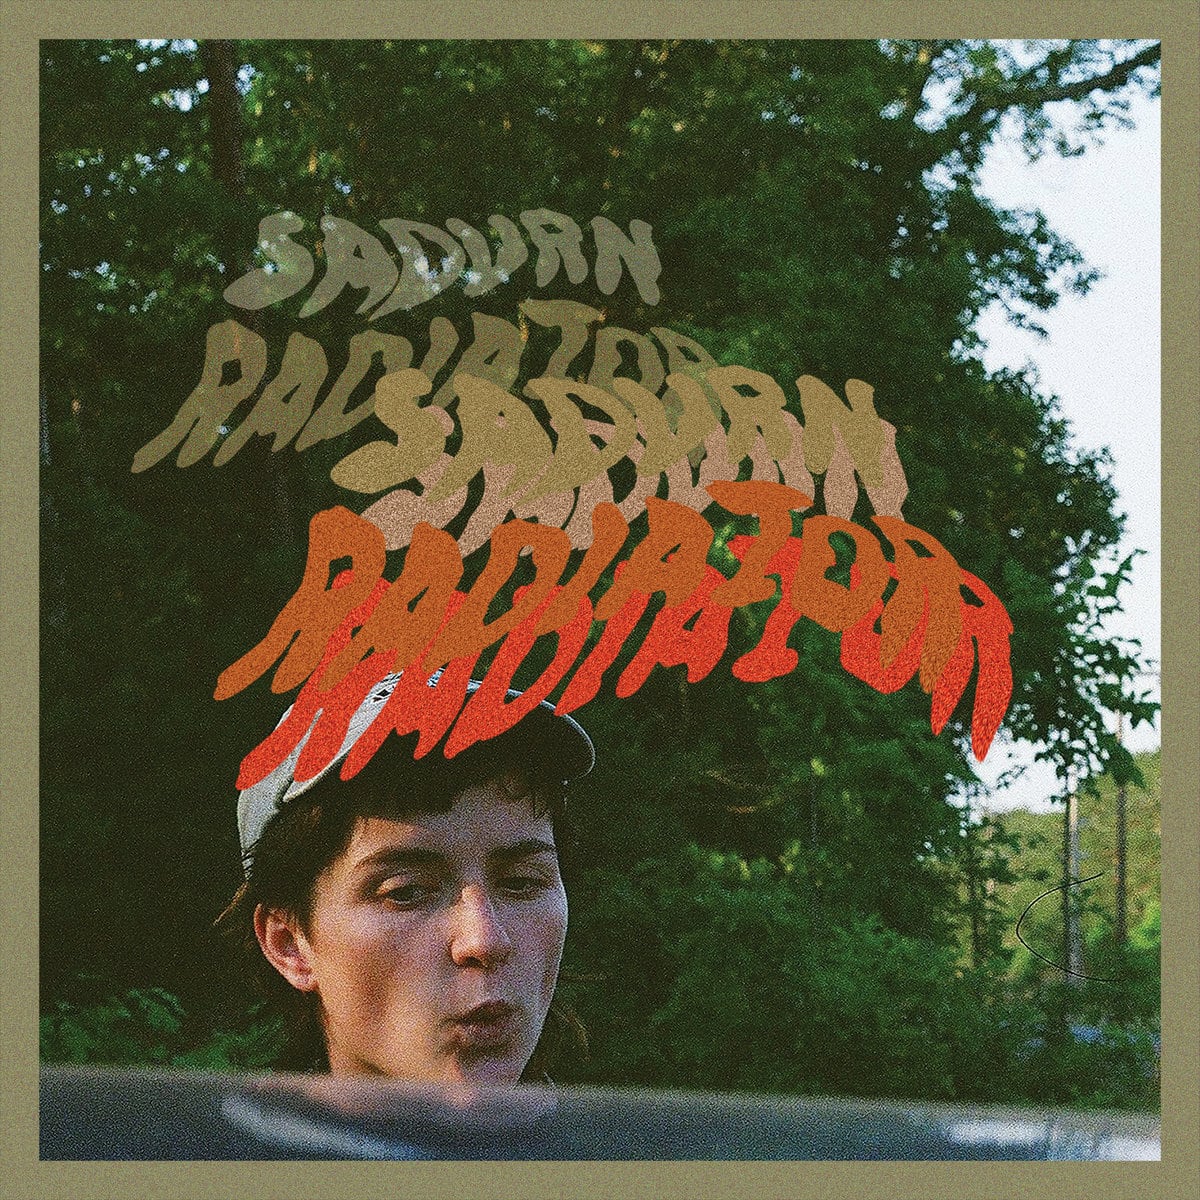 Sadurn / Radiator Sadurn（1000 Ltd Clear LP）